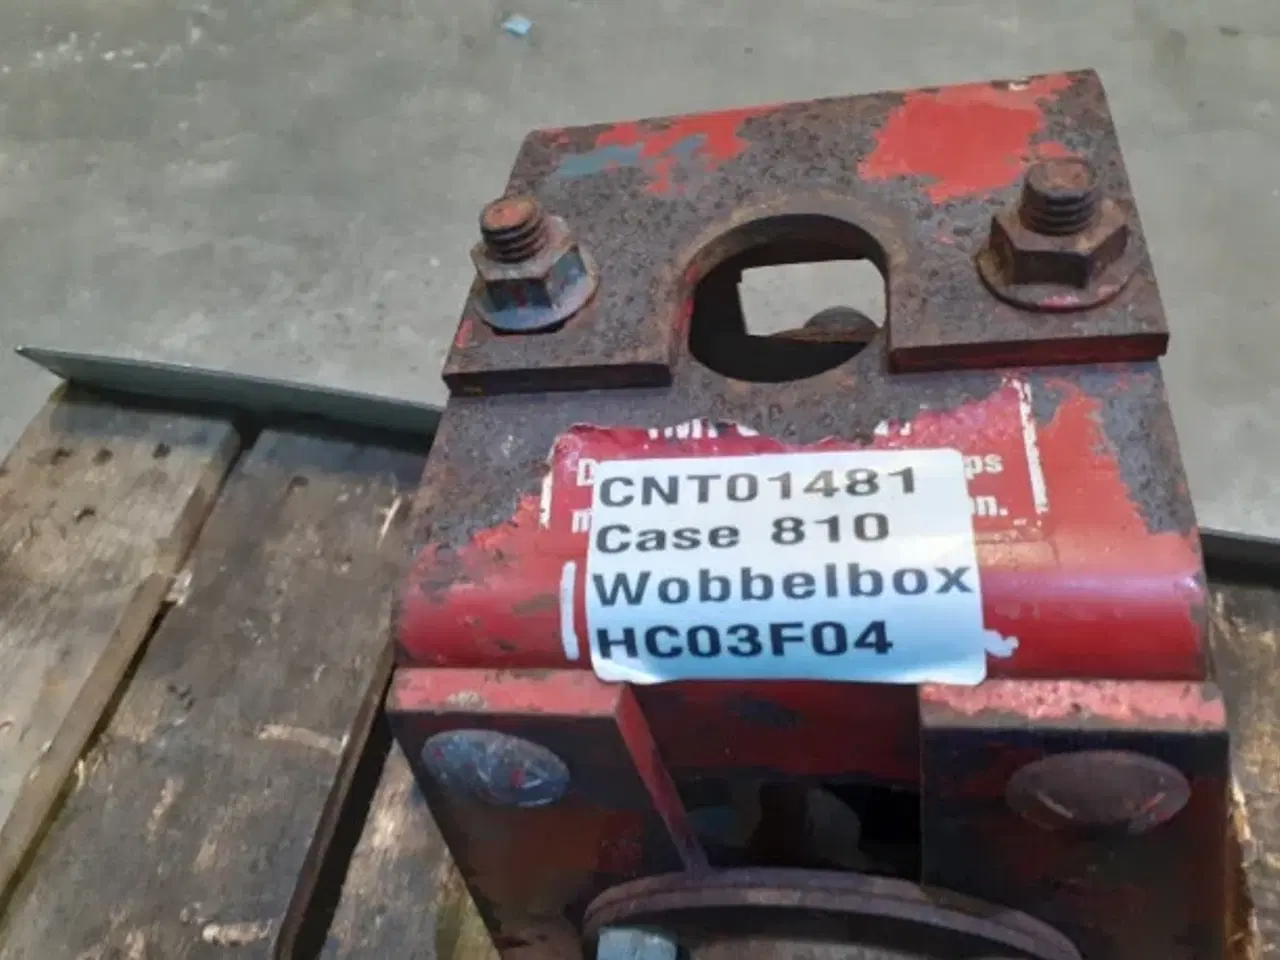 Billede 7 - Case 810 Wobblebox